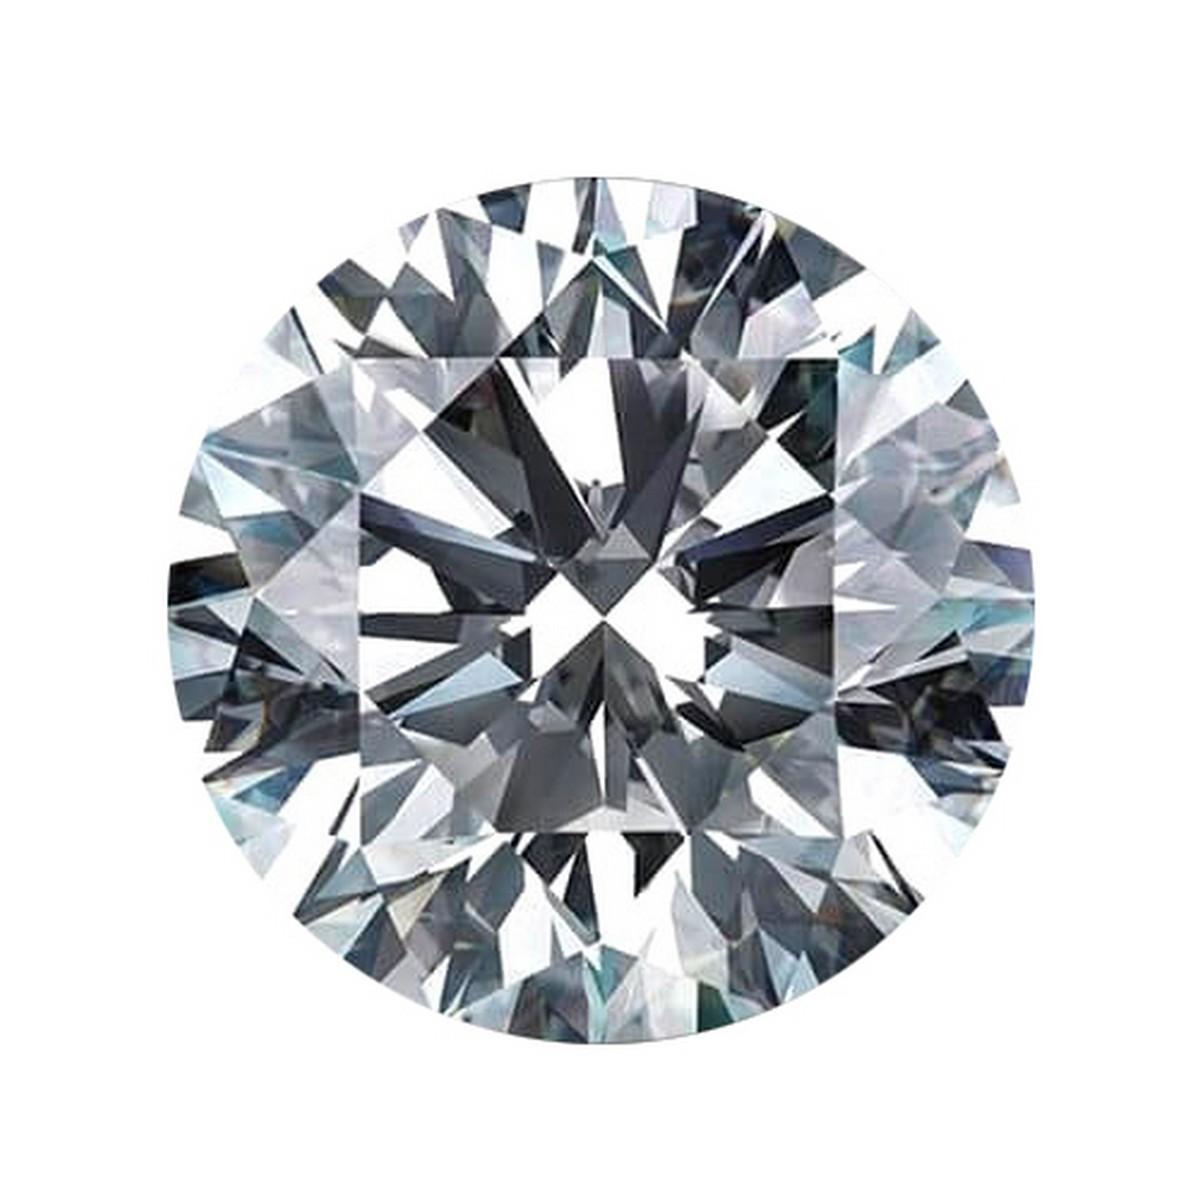 4.46 ctw. VVS2 IGI Certified Round Brilliant Cut Loose Diamond (LAB GROWN)